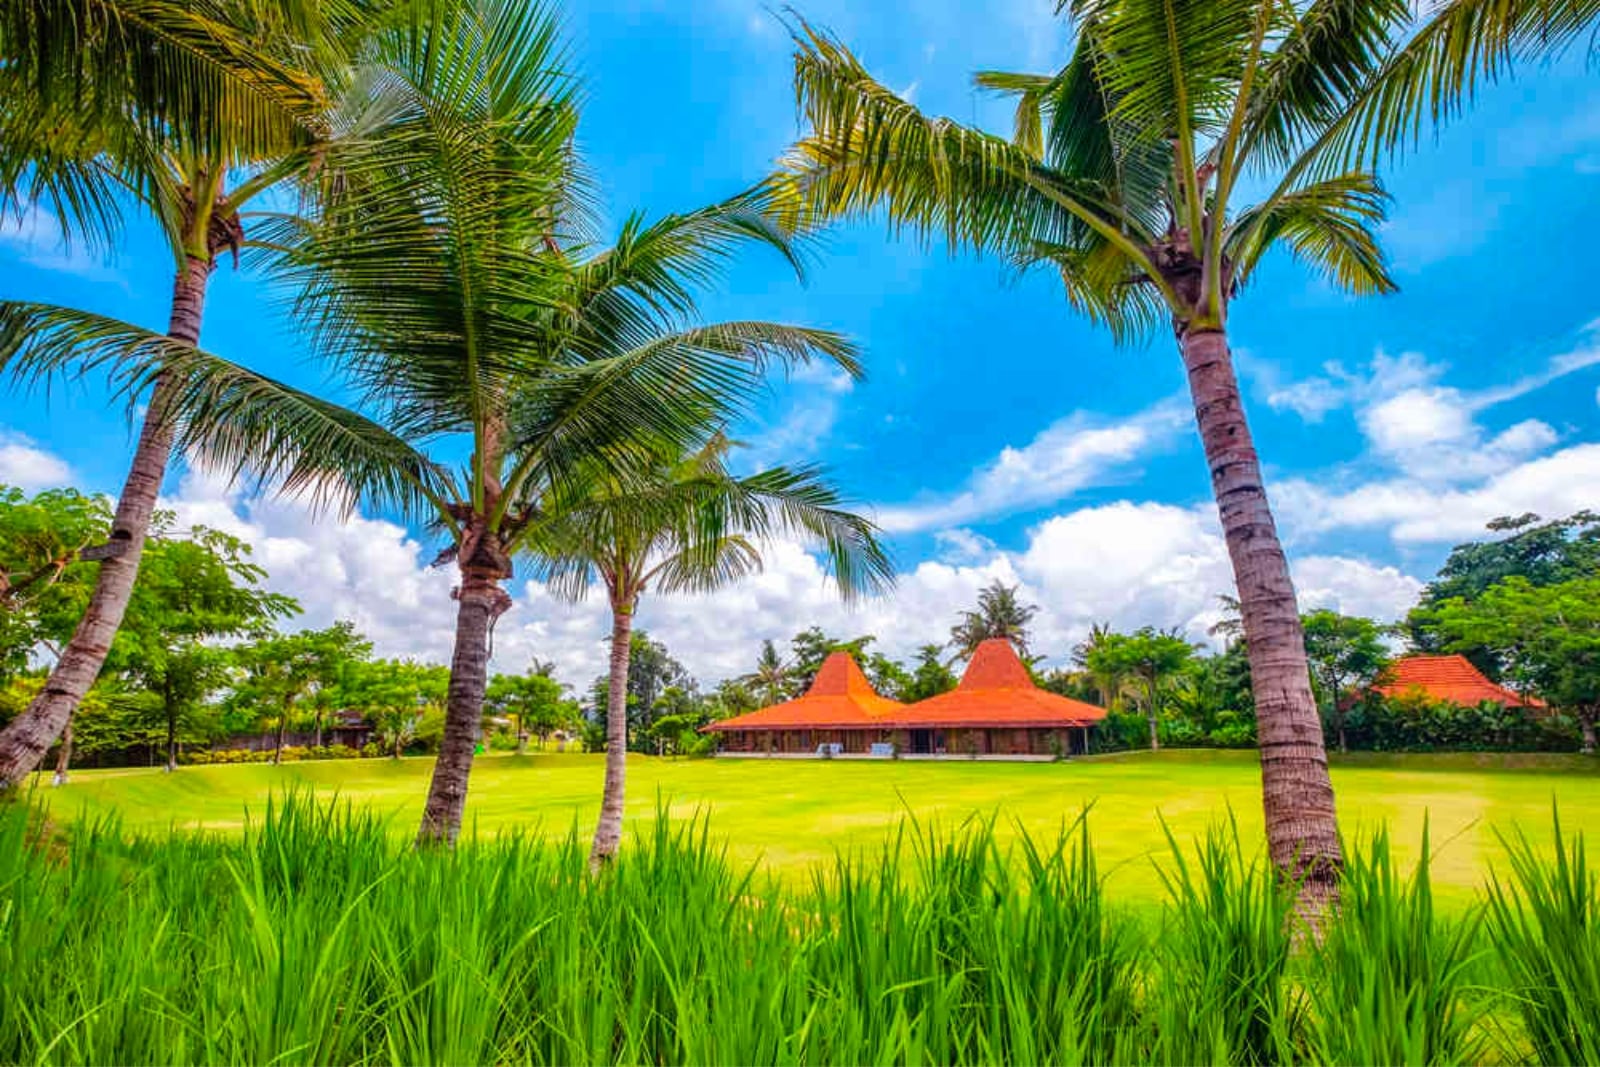 Fields of grass at Bali resort